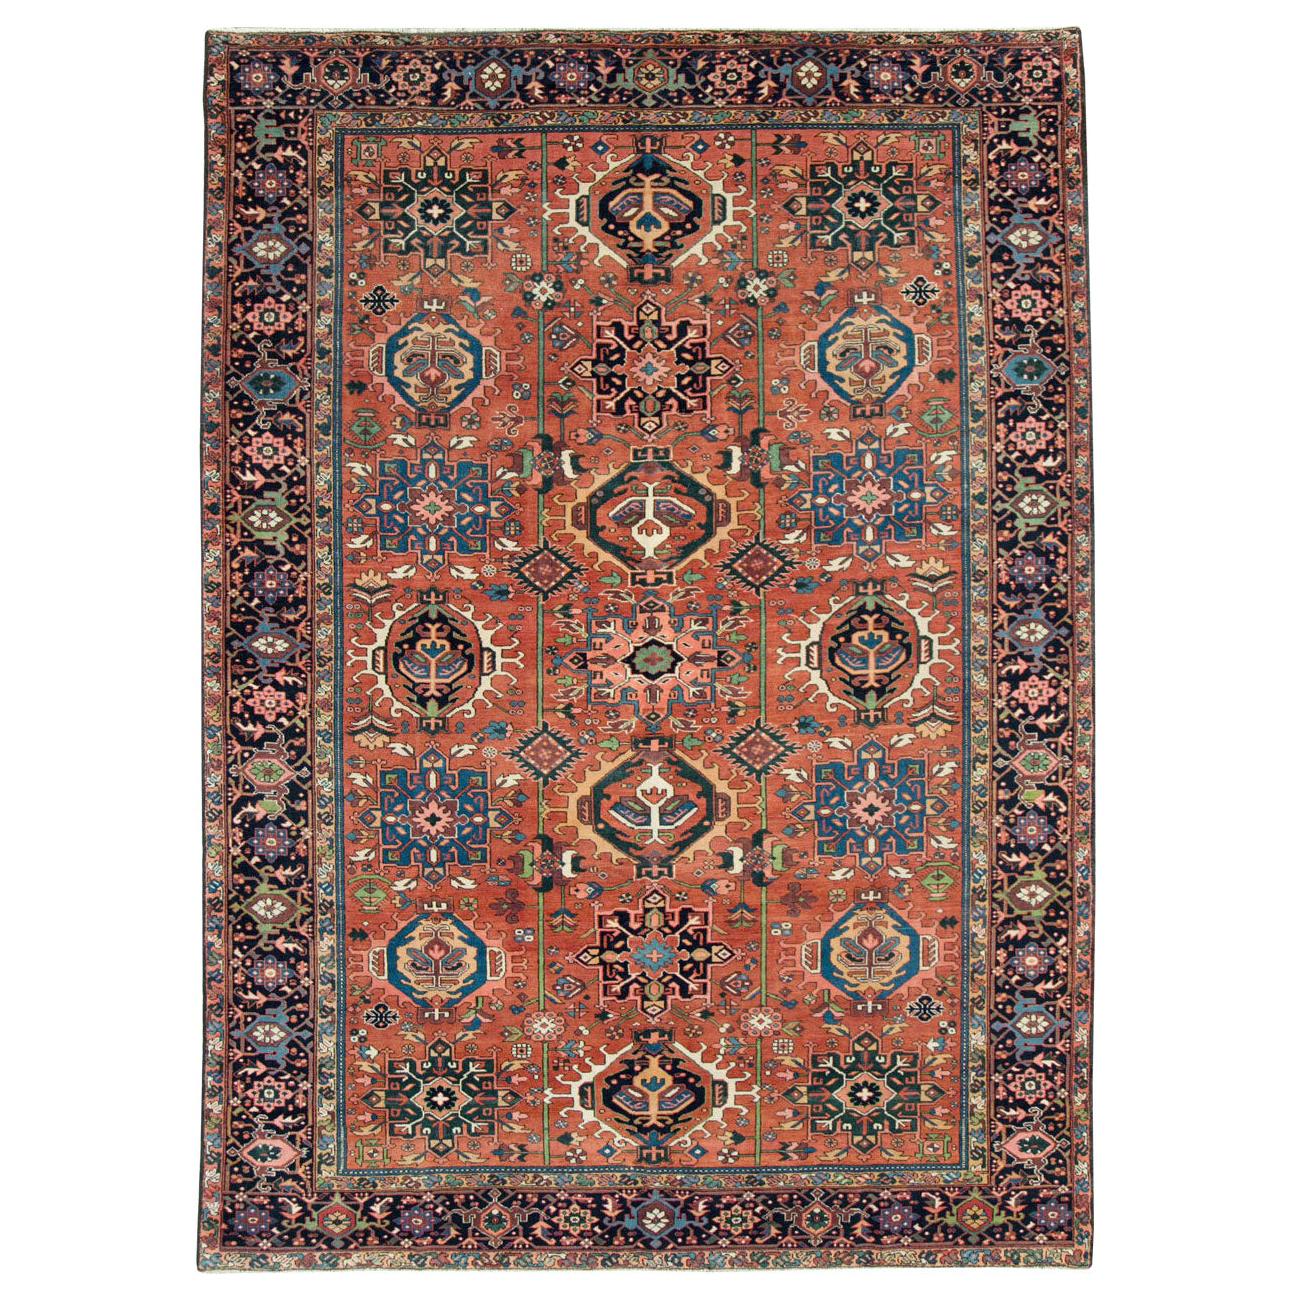 Early 20th Century Handmade Persian Karajeh Room Size Carpet For Sale